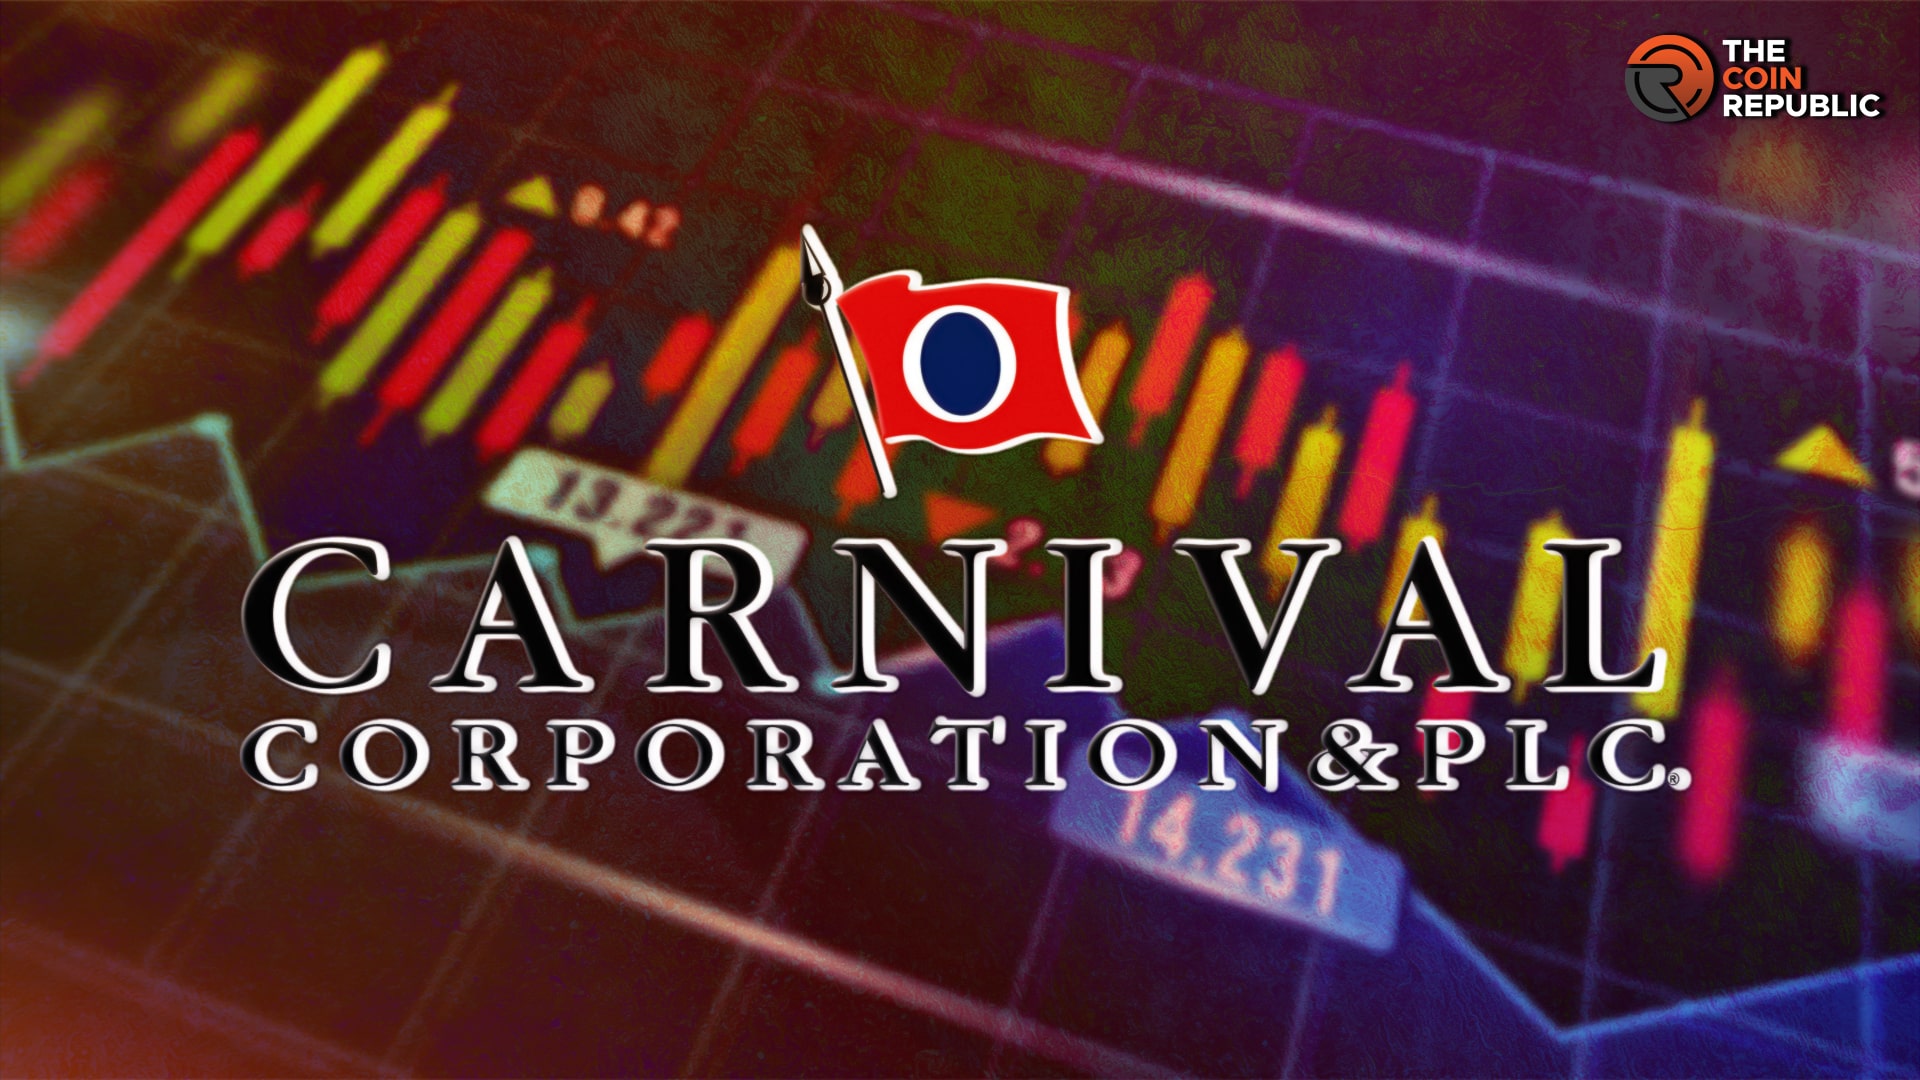 CCL Stock Forecast: Will Carnival Stock Break Below $10 Mark?